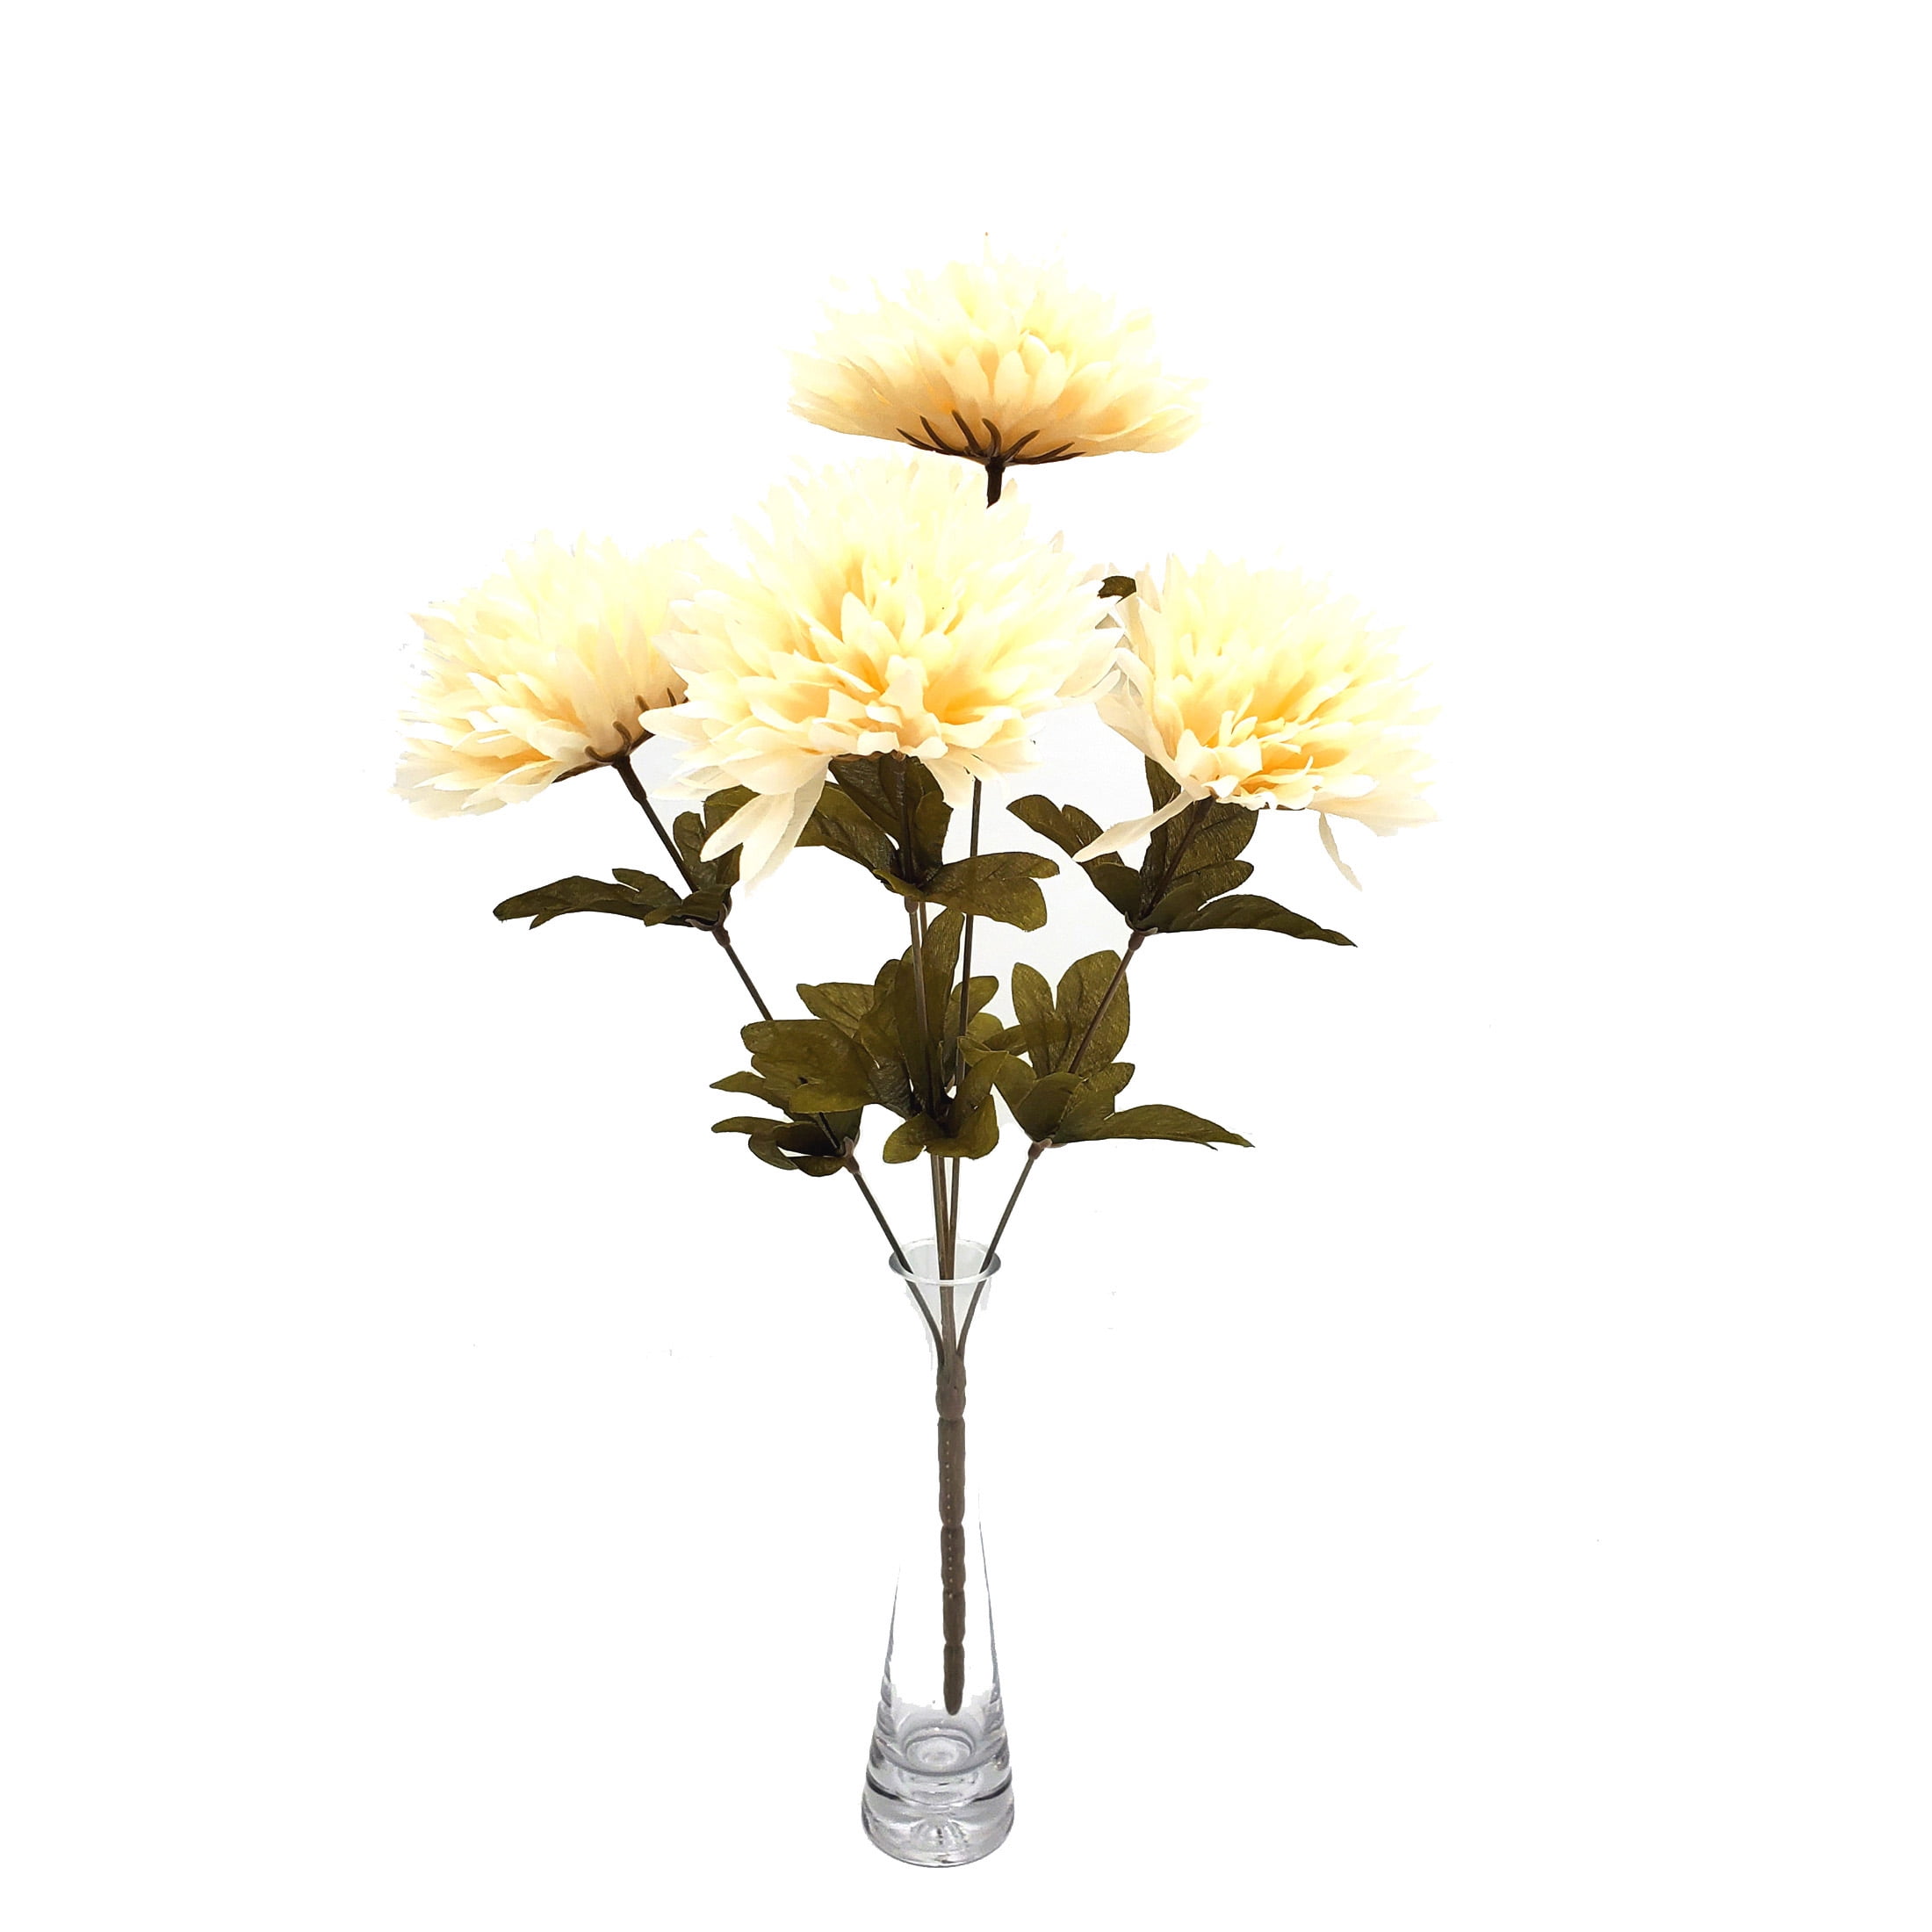 Mainstays 18" Tall Artificia Flower Stem, Cream Mum Bush with Green Leaves